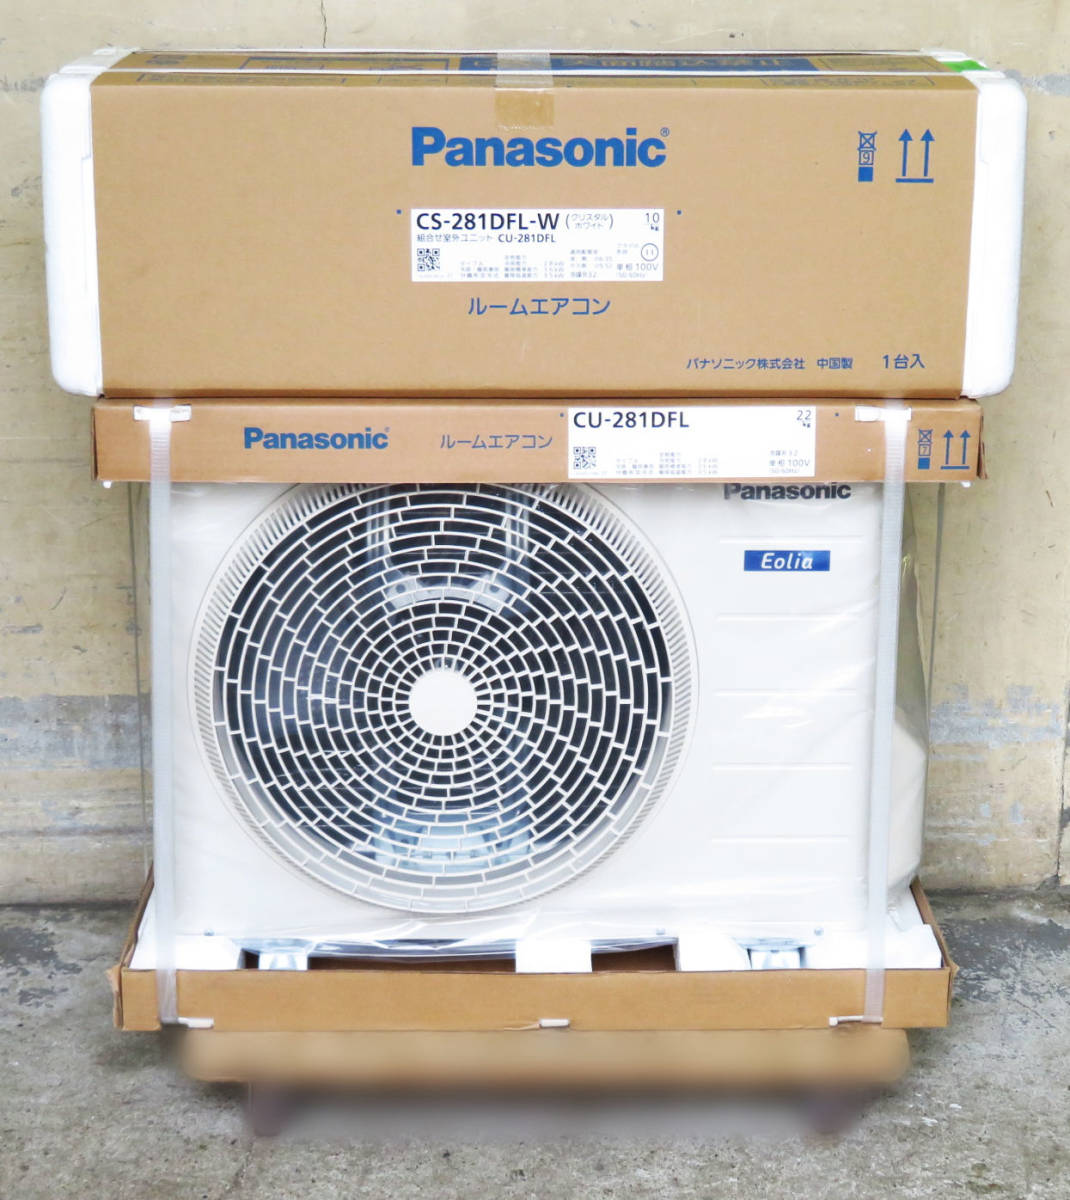 Panasonic パナソニック ルームエアコン エオリア CS-281DFL-W CU-281DFL クリスタルホワイト 2021年モデル 室内機  室外機 セット 未開封品